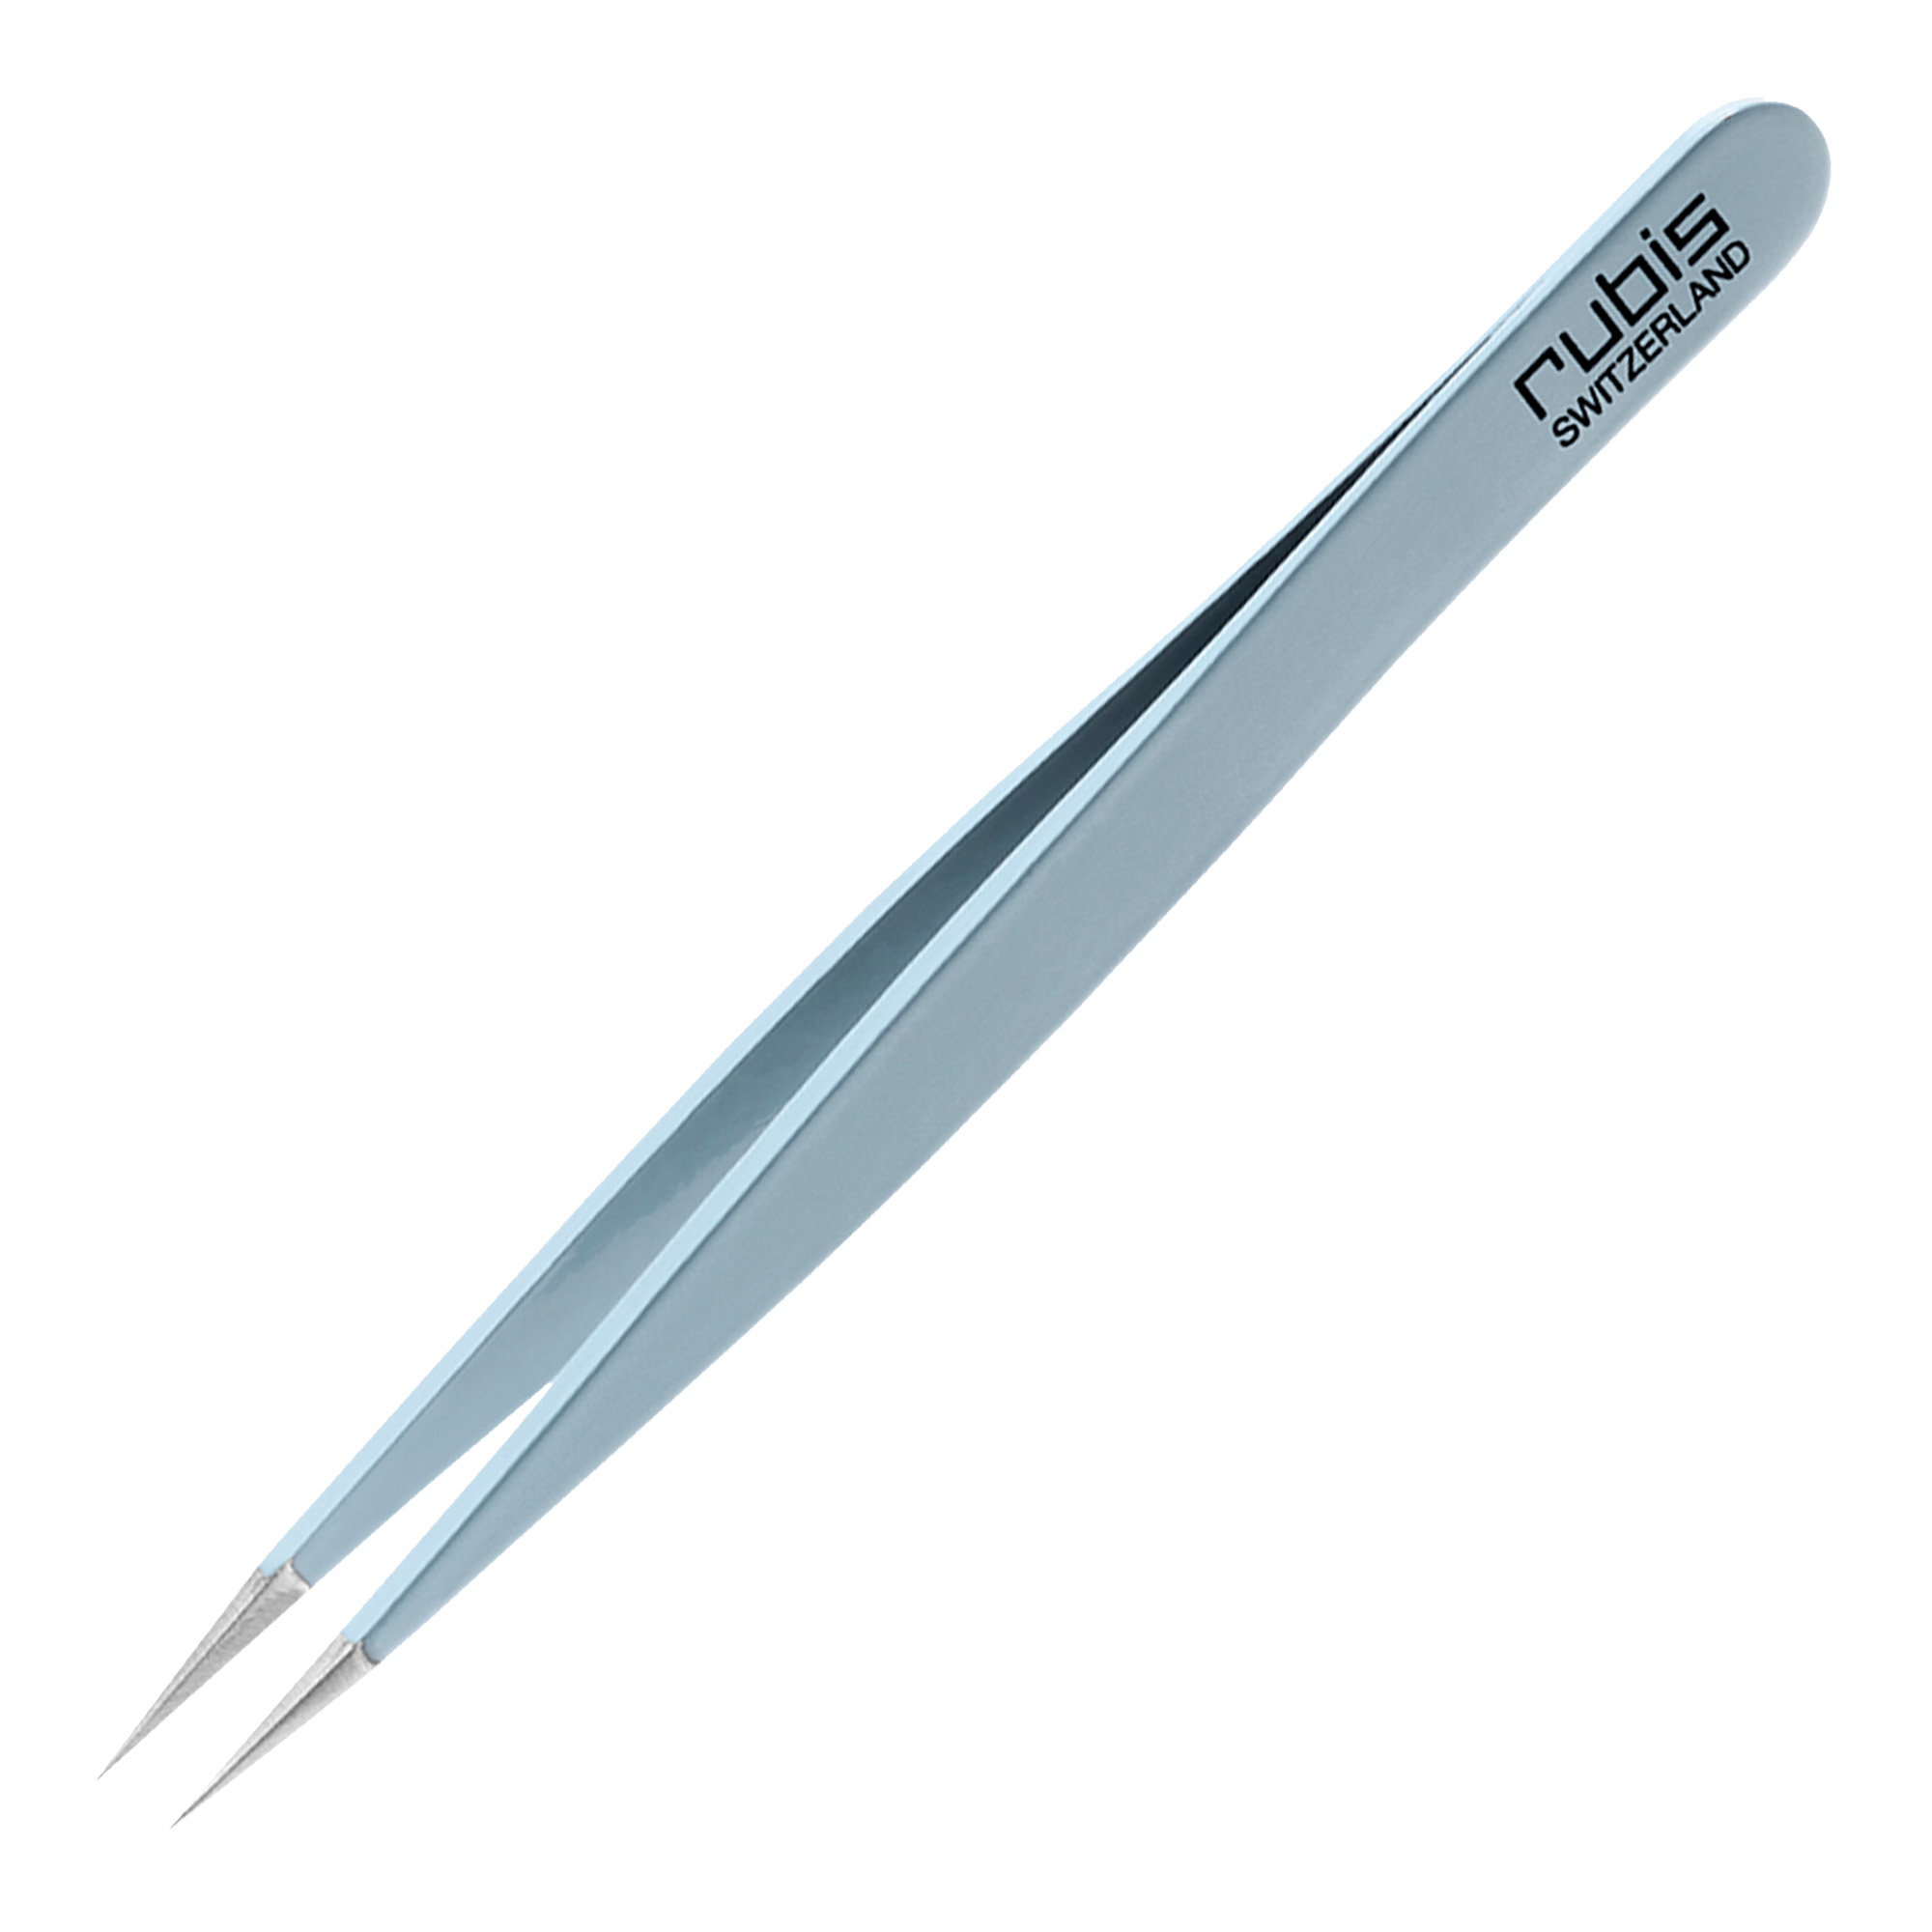 Rubis sharp-tipped stainless steel tweezers light blue